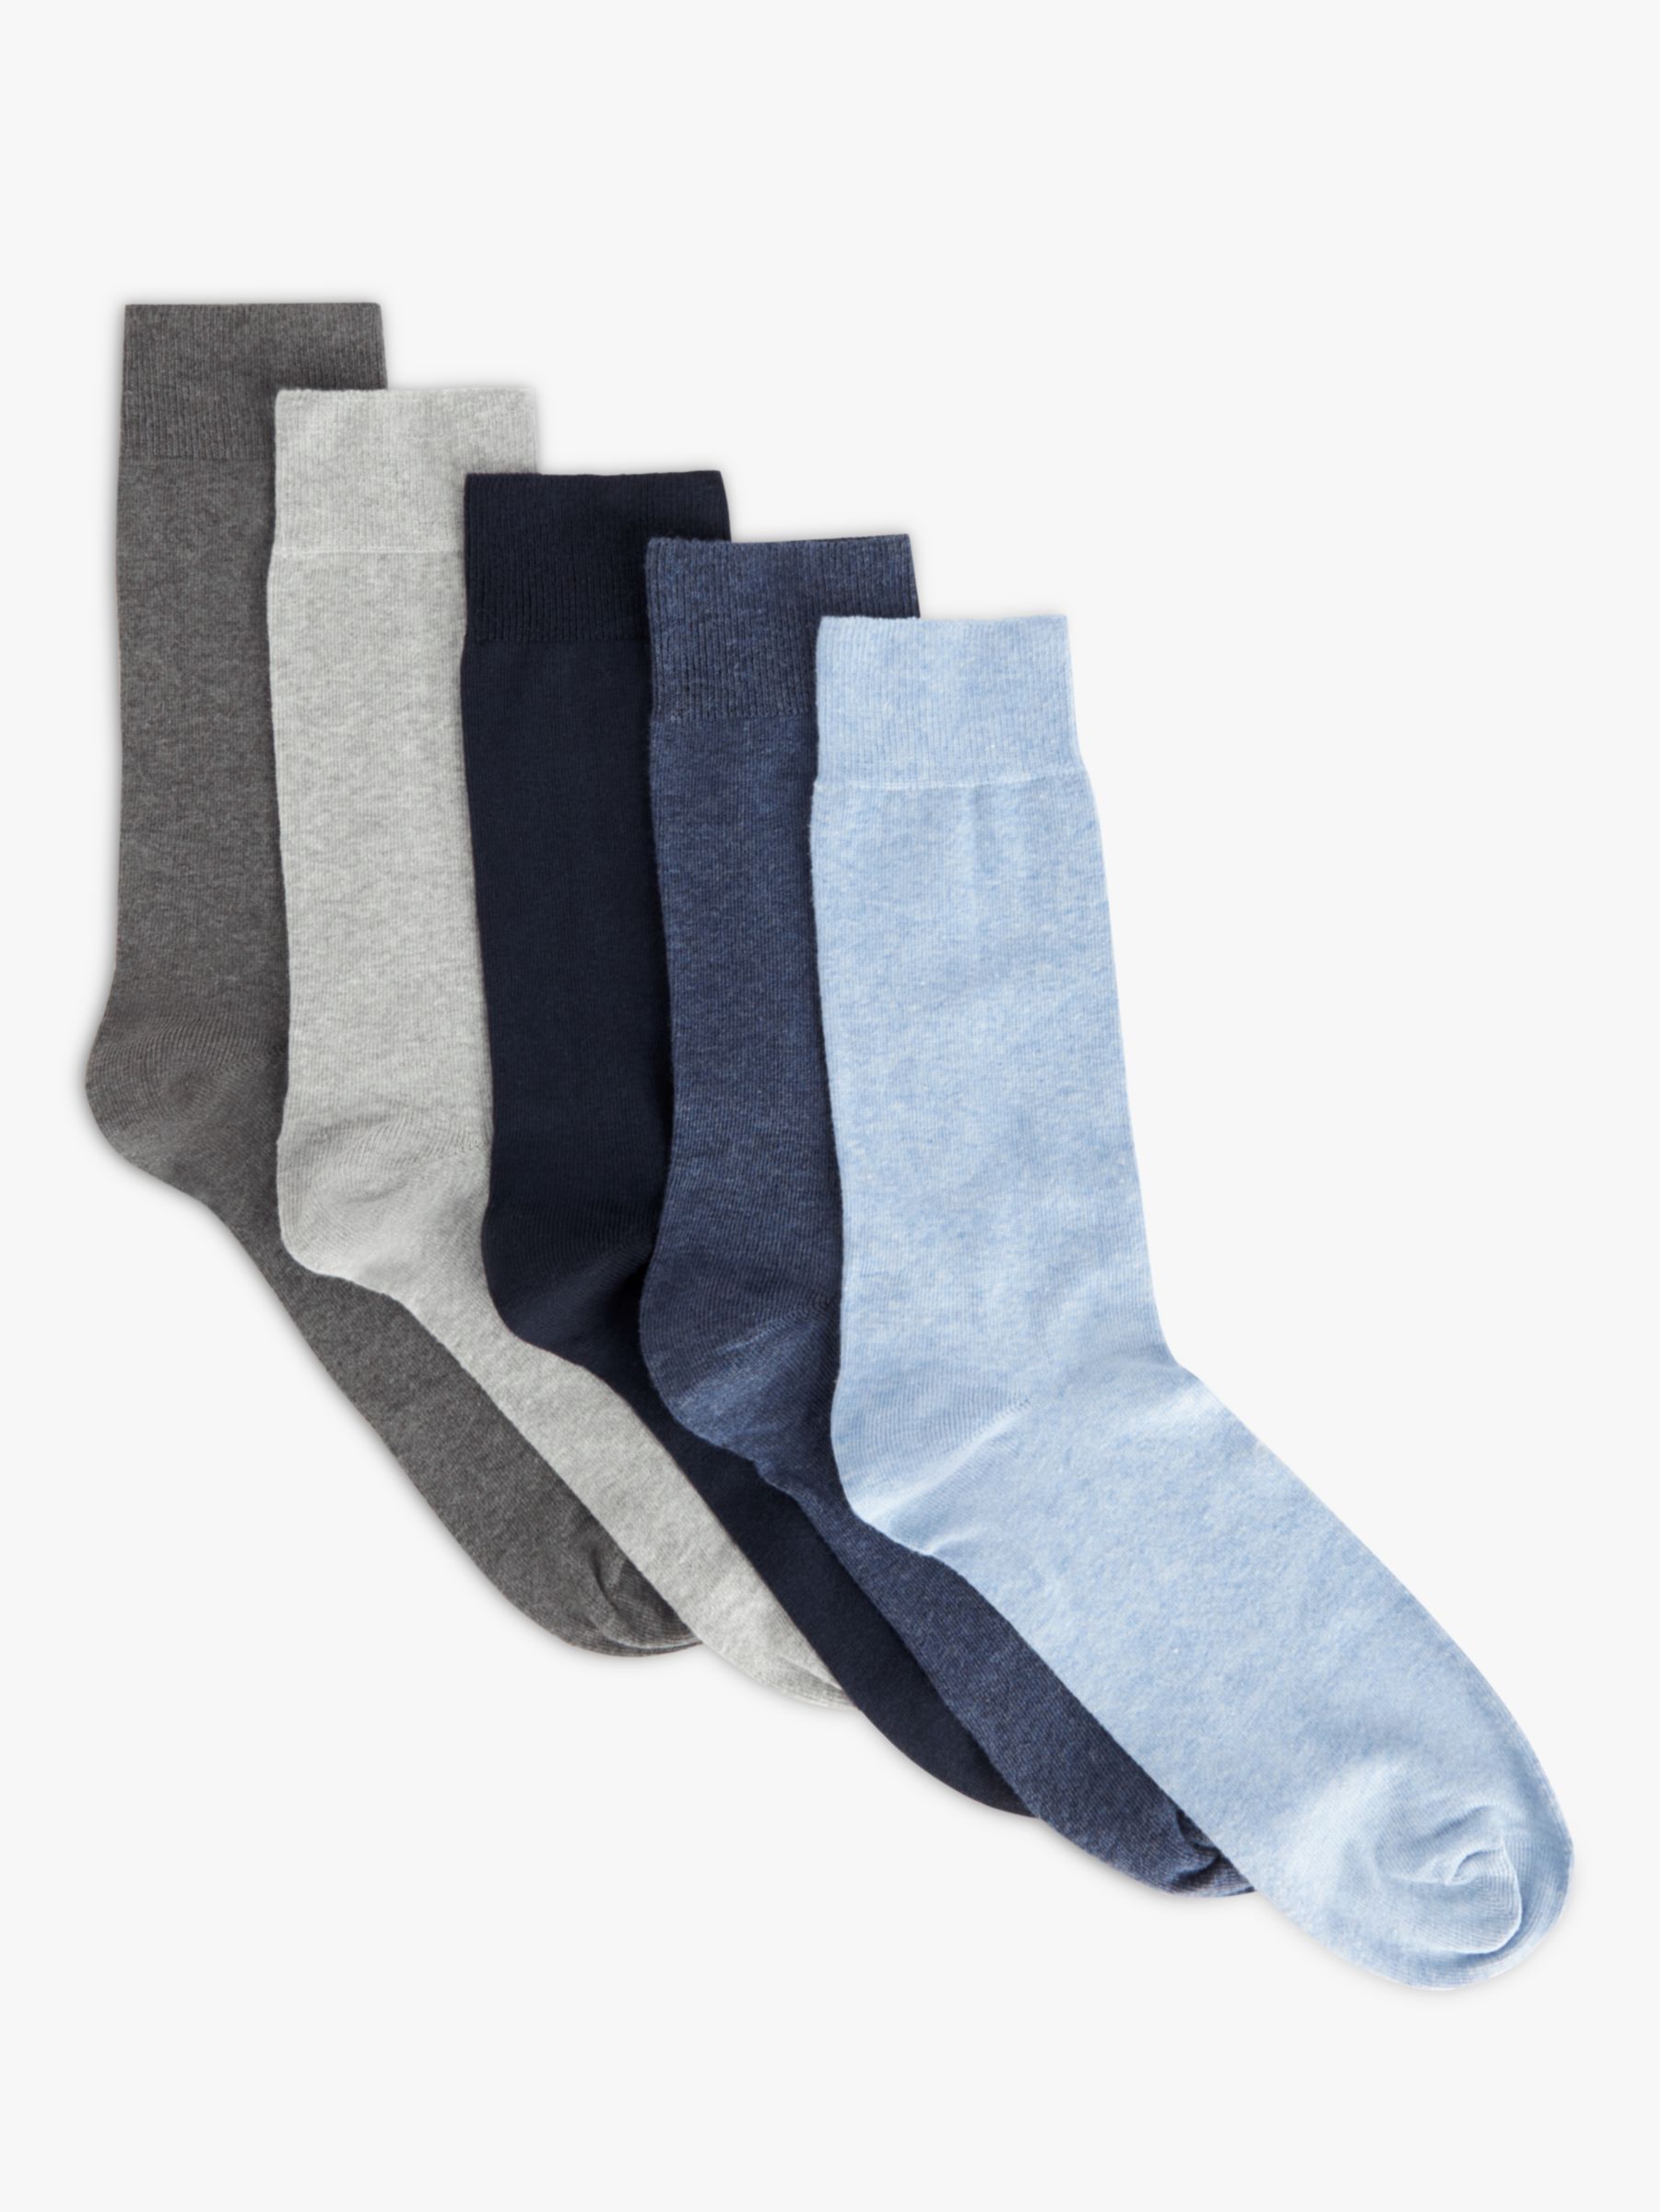 John Lewis ANYDAY Cotton Rich Plain Men's Socks, Pack of 5, Blue/Grey, S